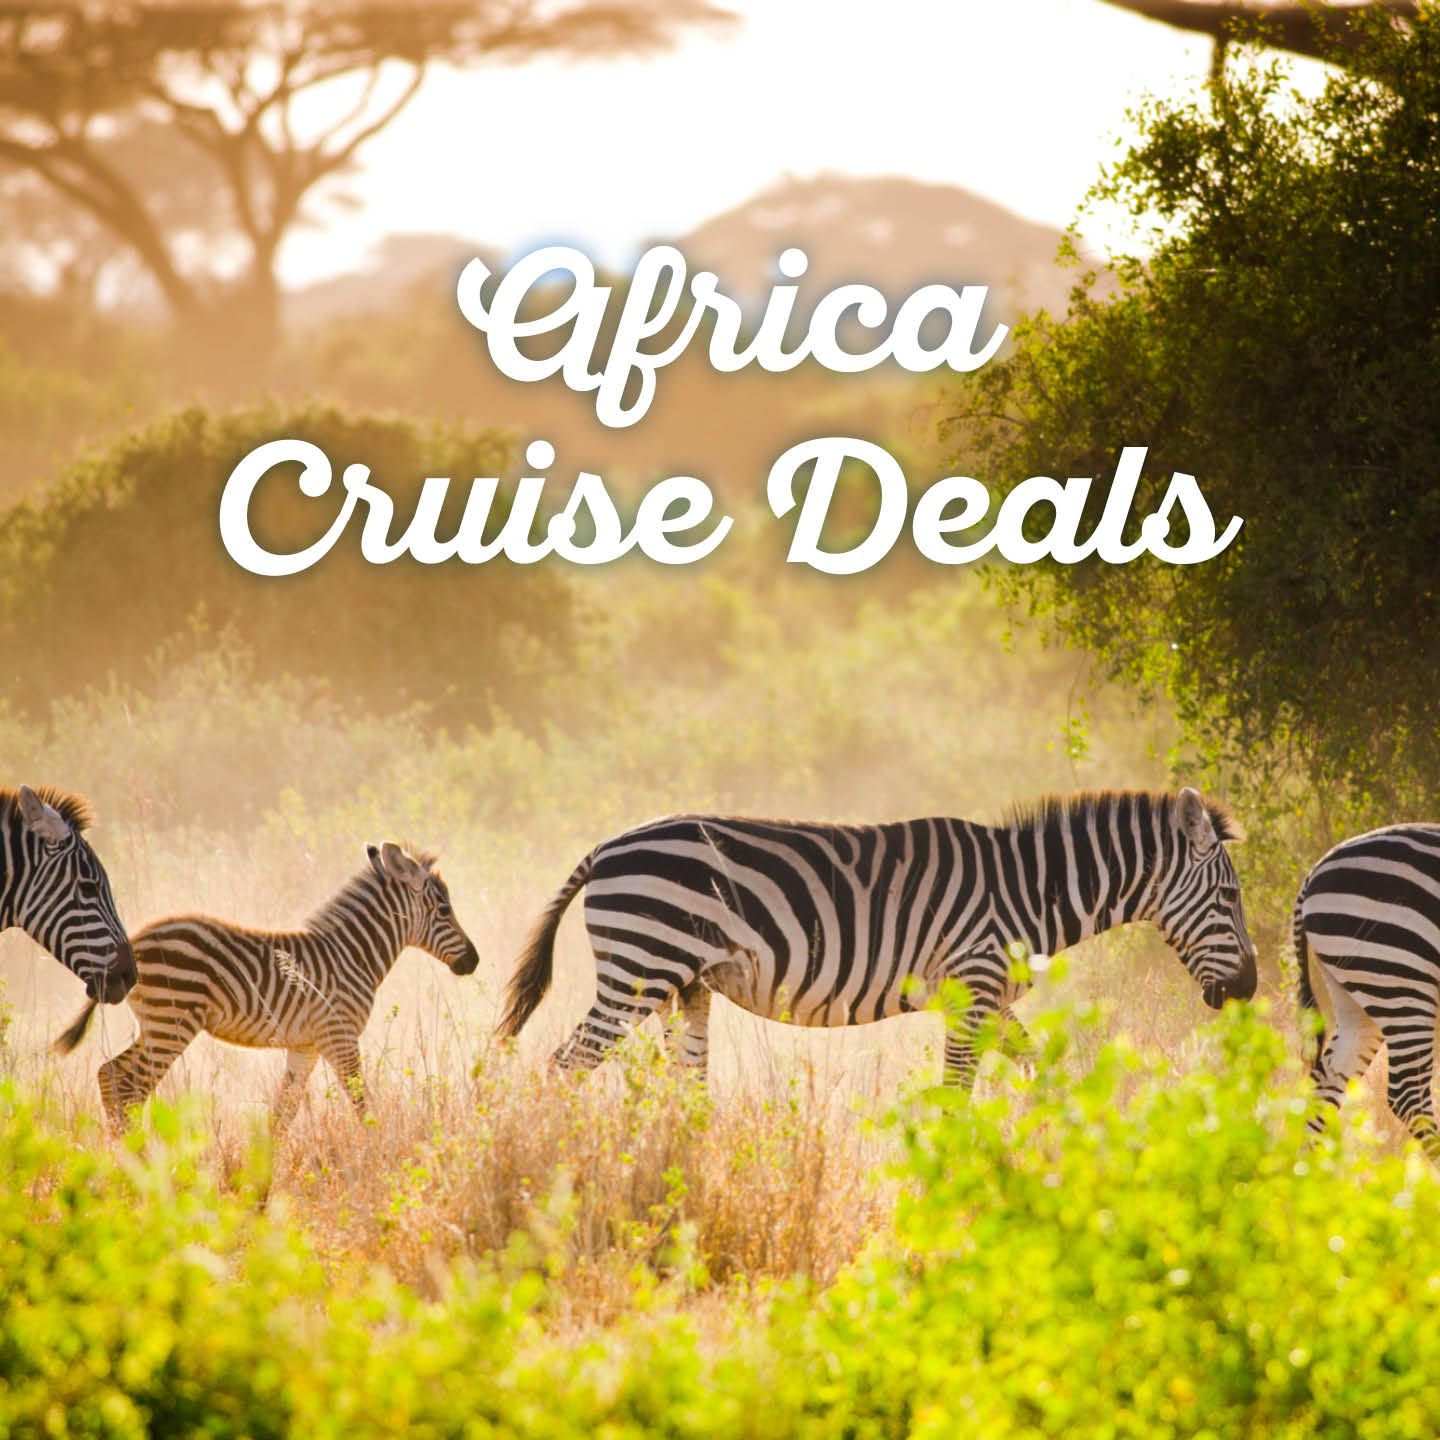 africa-cruise-deals1-thumb.jpg